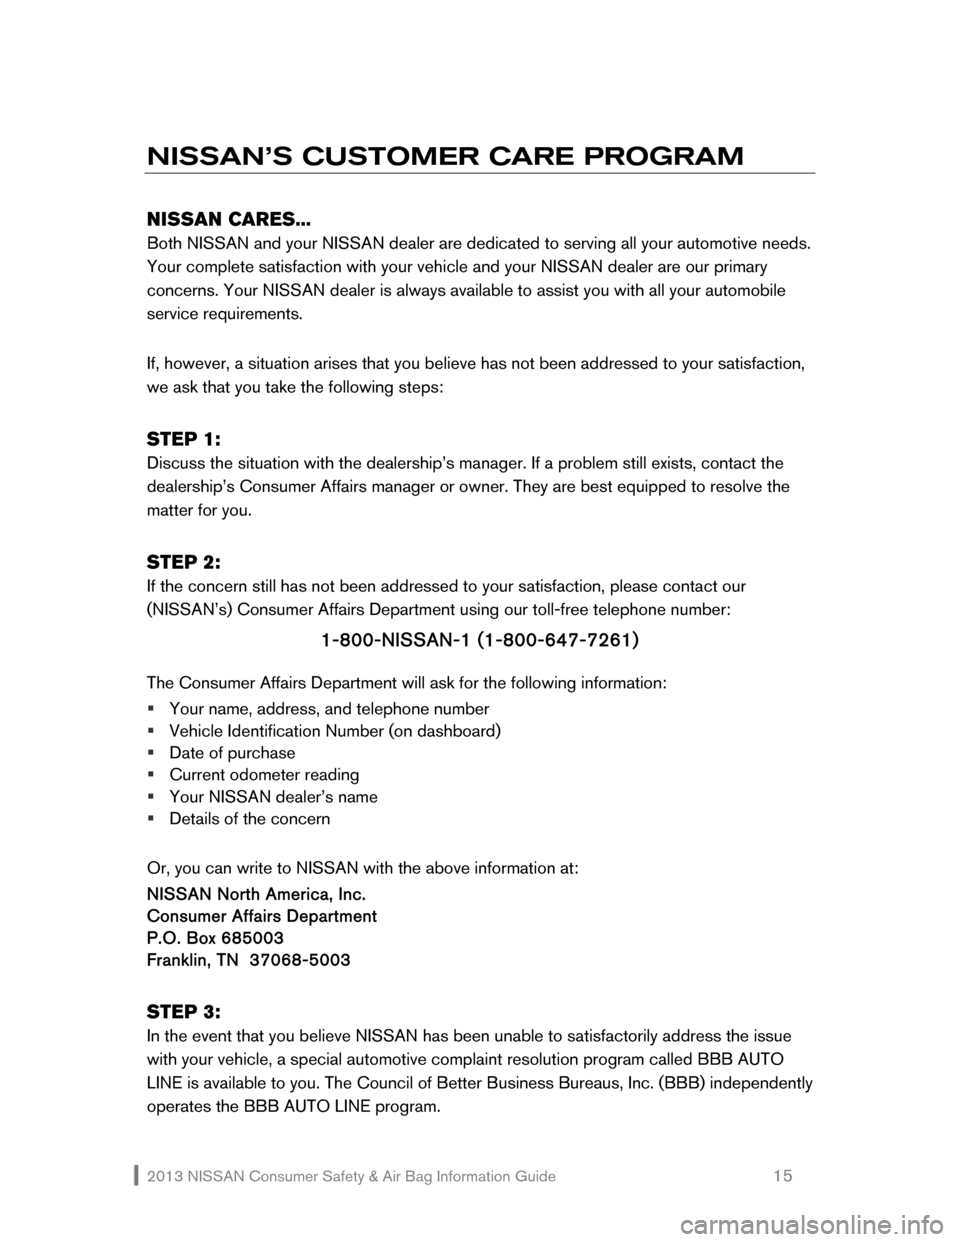 NISSAN MAXIMA 2013 A35 / 7.G Consumer Safety Air Bag Information Guide 2013 NISSAN Consumer Safety & Air Bag Information Guide                                                   15 
NISSAN’S CUSTOMER CARE PROGRAM 
 
NISSAN CARES... 
Both NISSAN and your NISSAN dealer ar